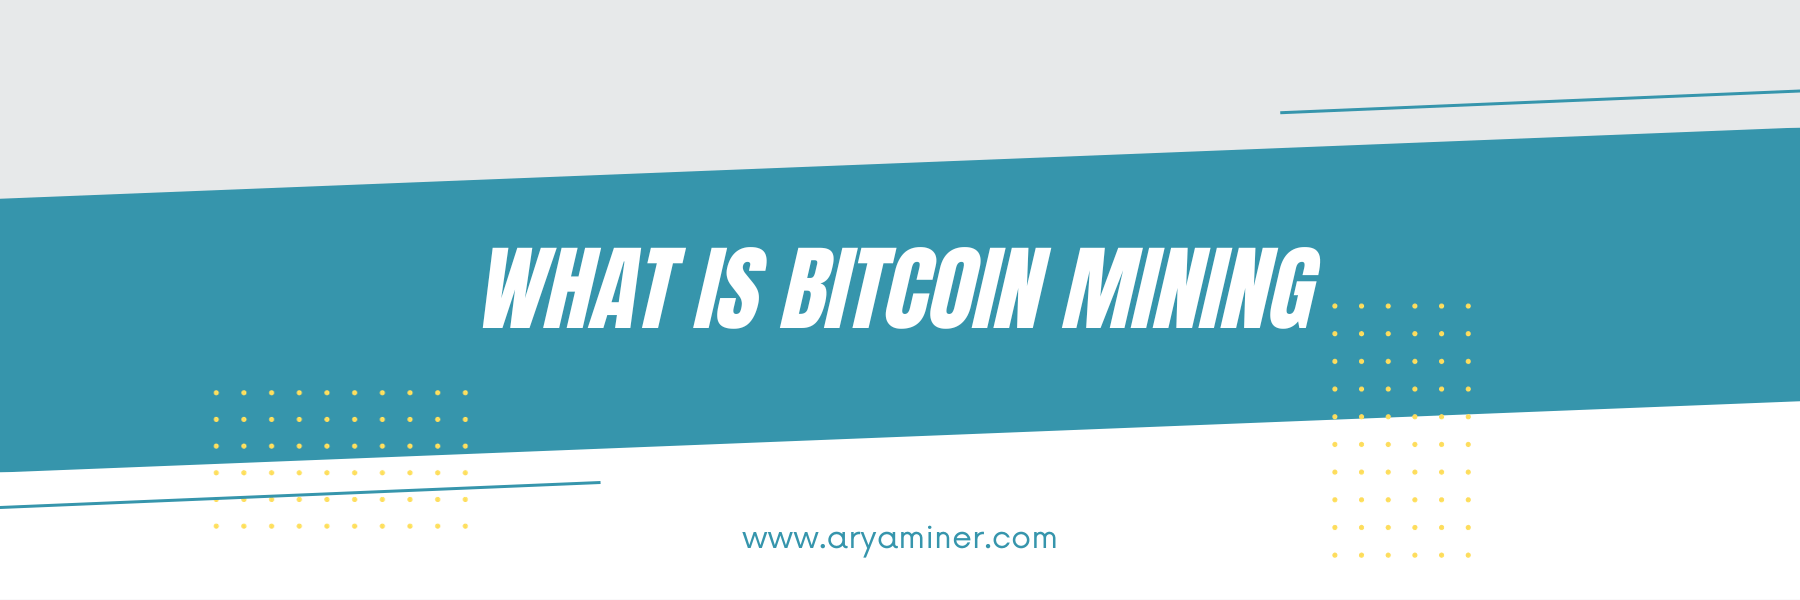 what is bitcoin mining? - Aryaminer